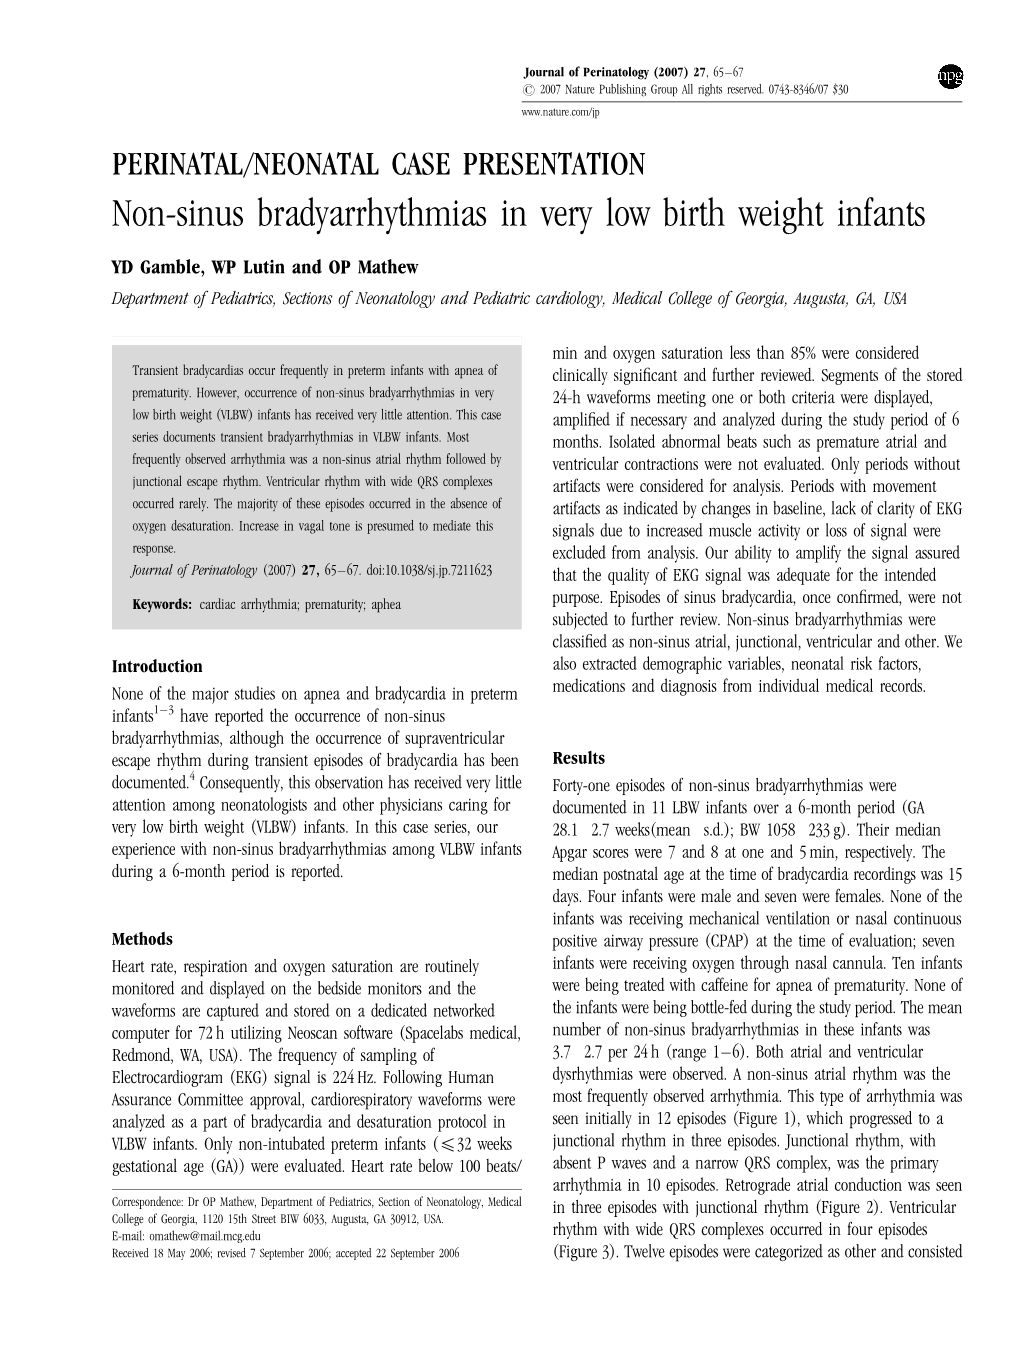 Non-Sinus Bradyarrhythmias in Very Low Birth Weight Infants